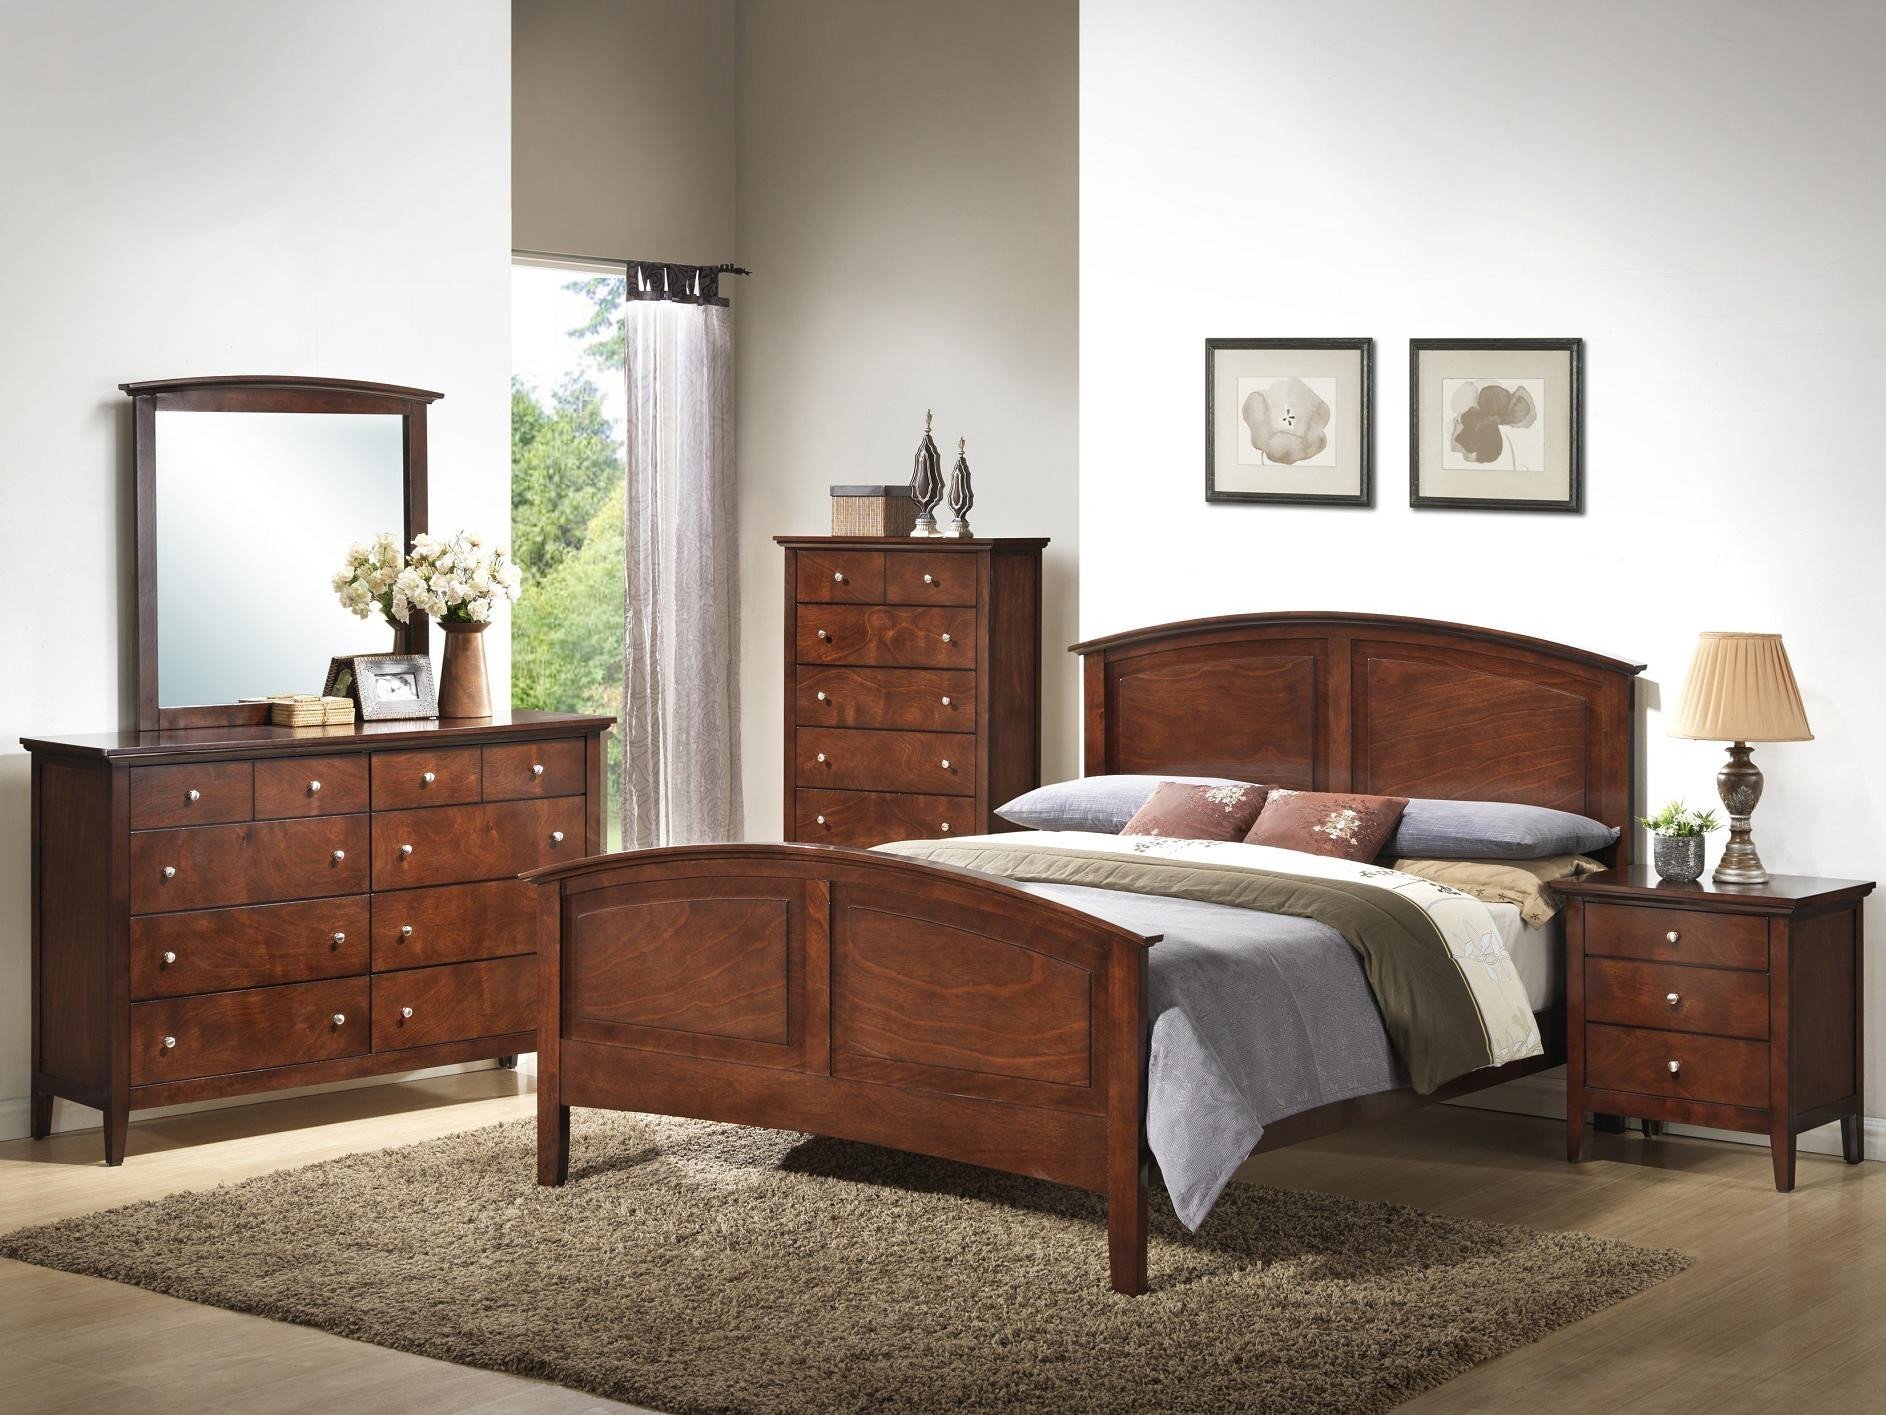 Regency Furniture Bedroom Set Best Of Daily S